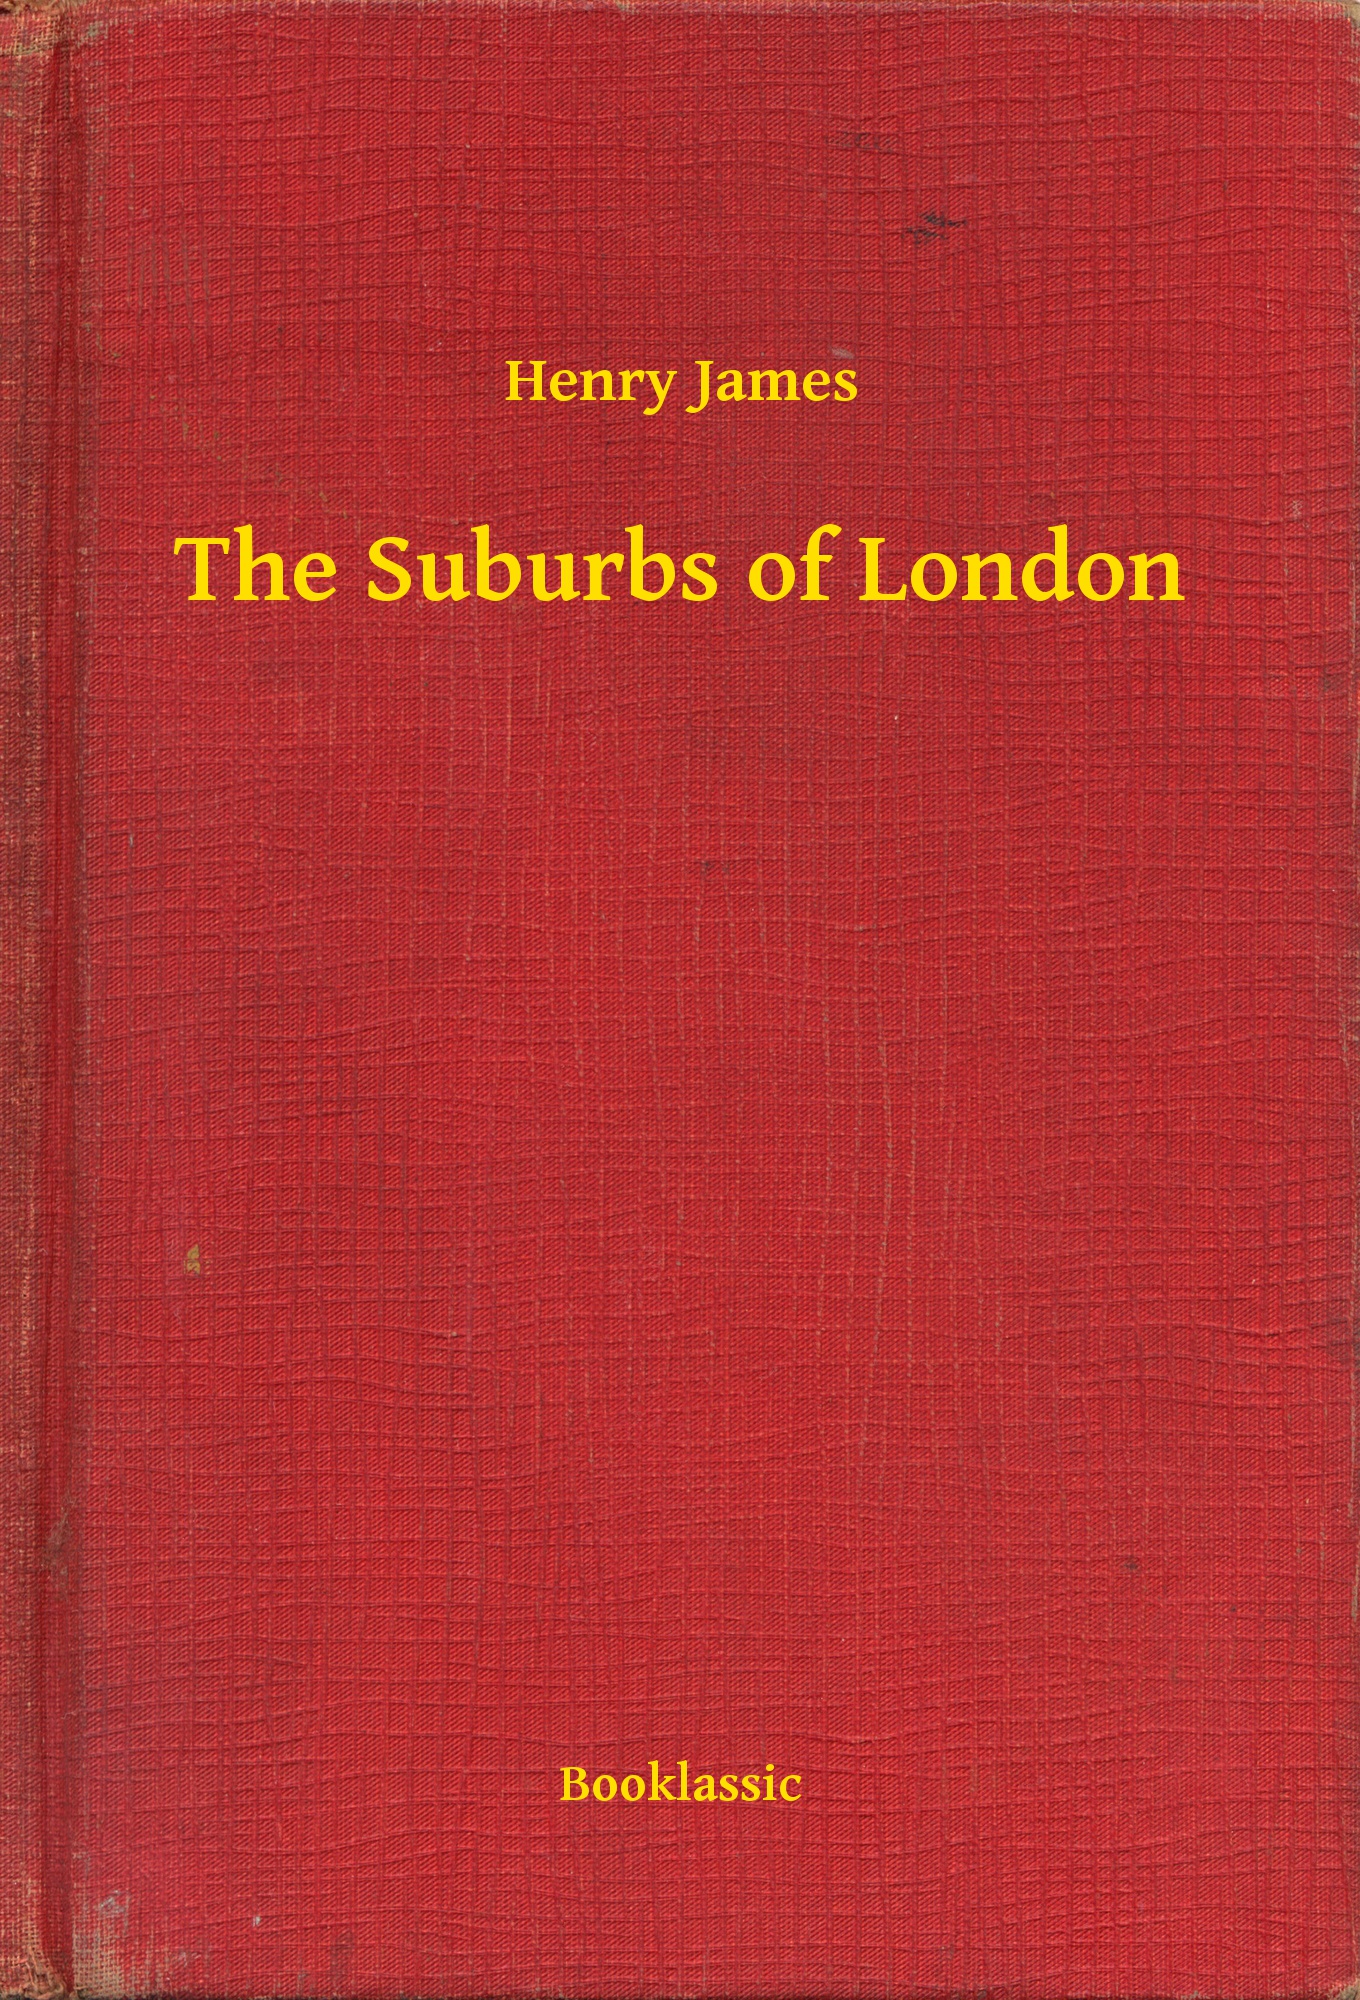 The Suburbs of London